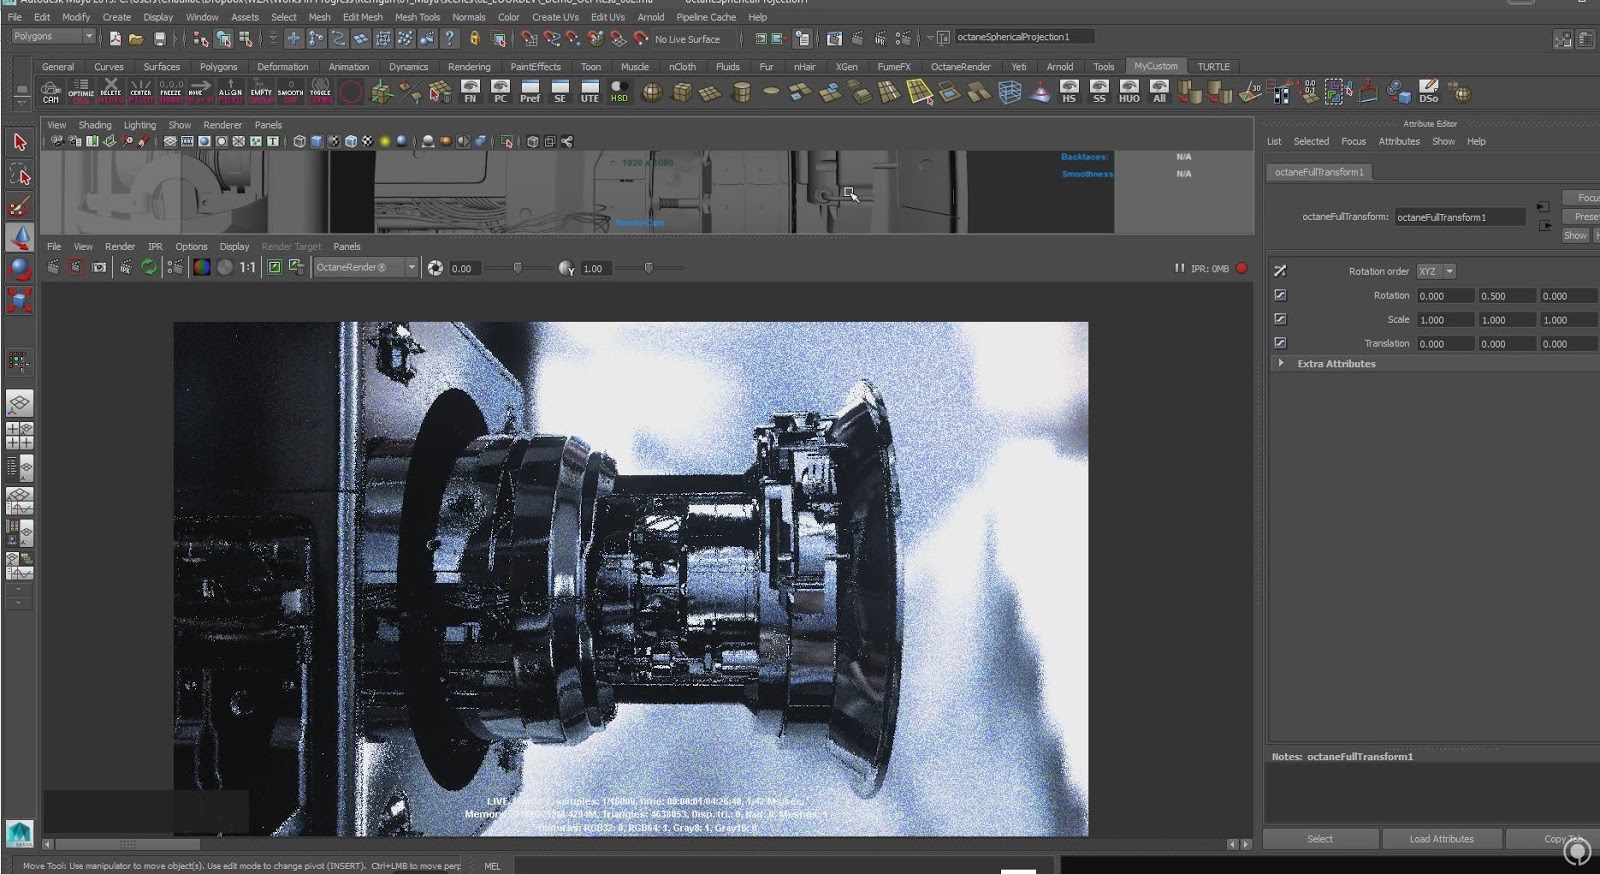 octane render cinema 4d plugin crack mac